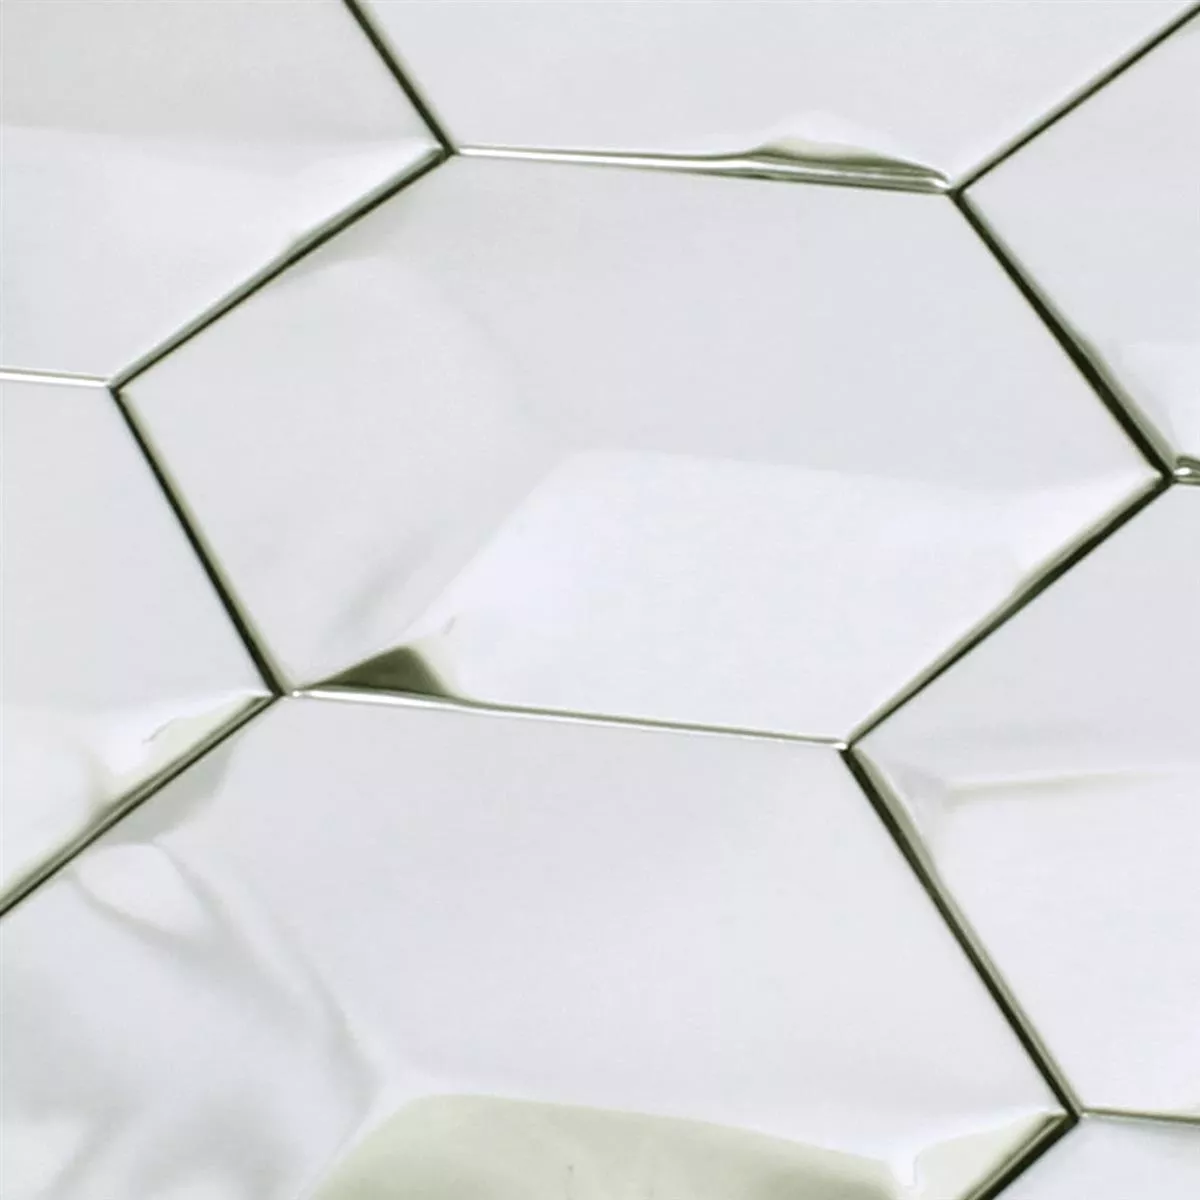 Sample Mosaic Tiles Stainless Steel Contender Hexagon Mat